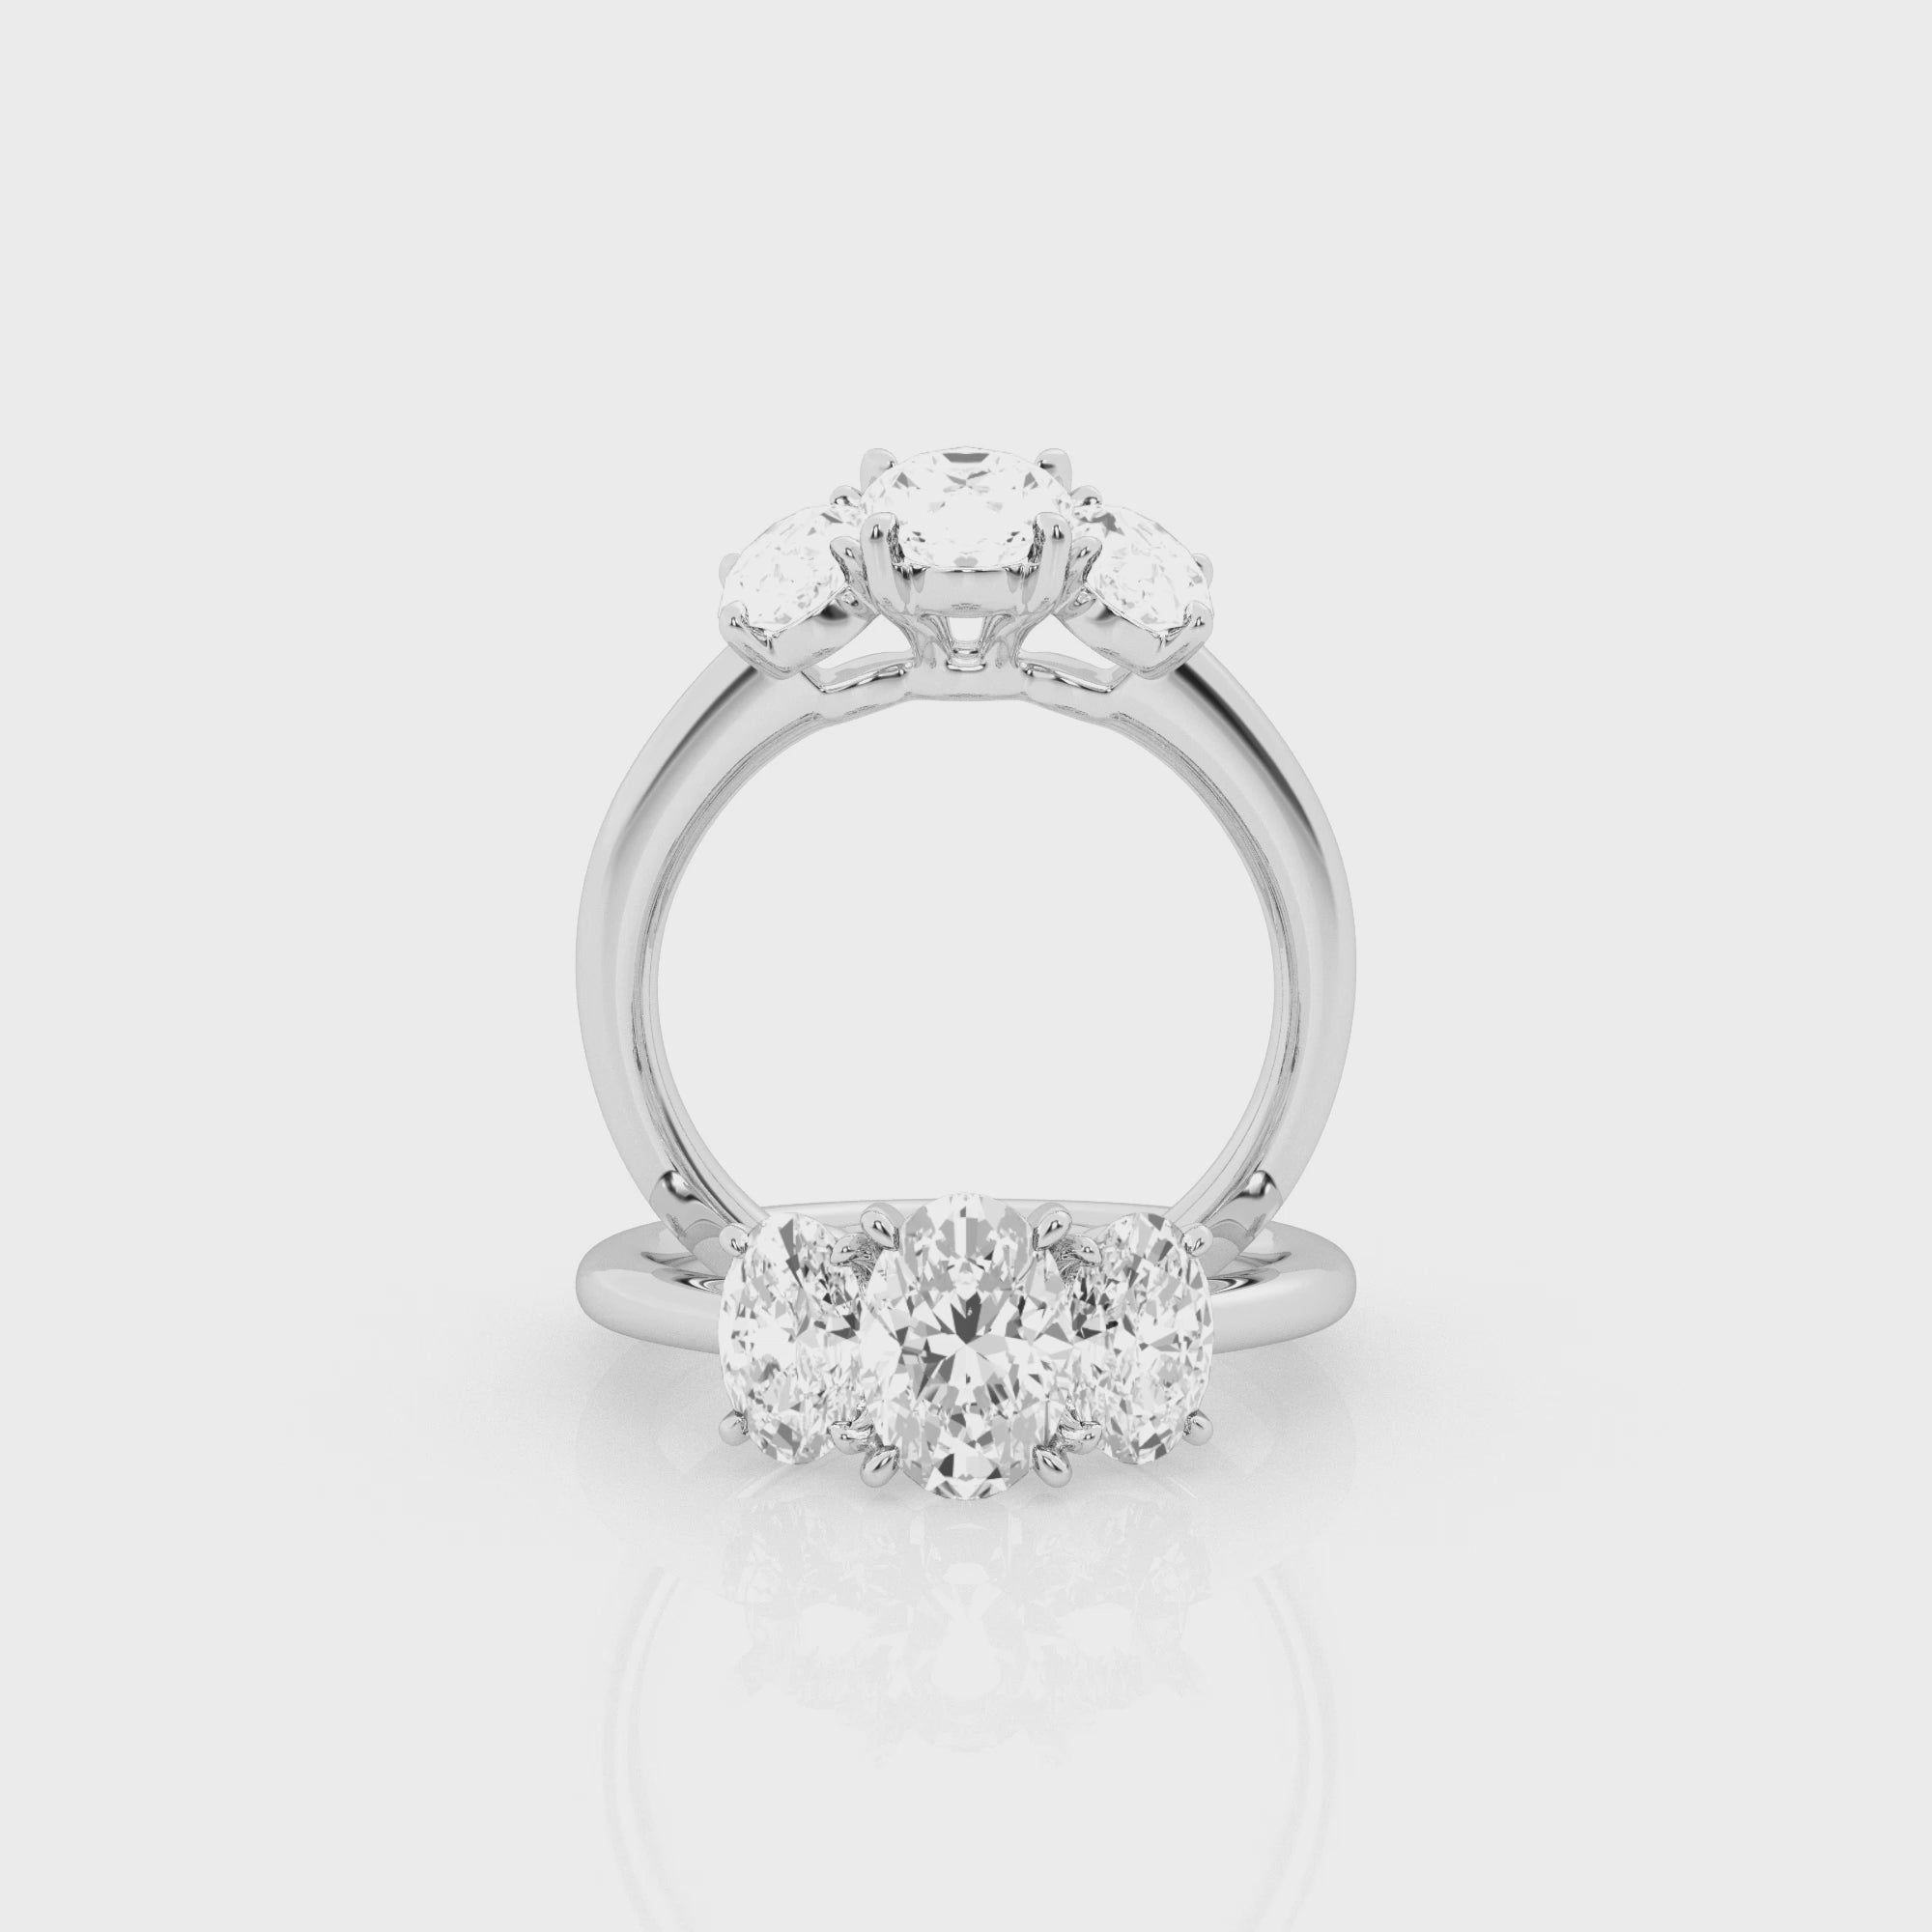 3 carat Oval Three Stone Diamond Ring